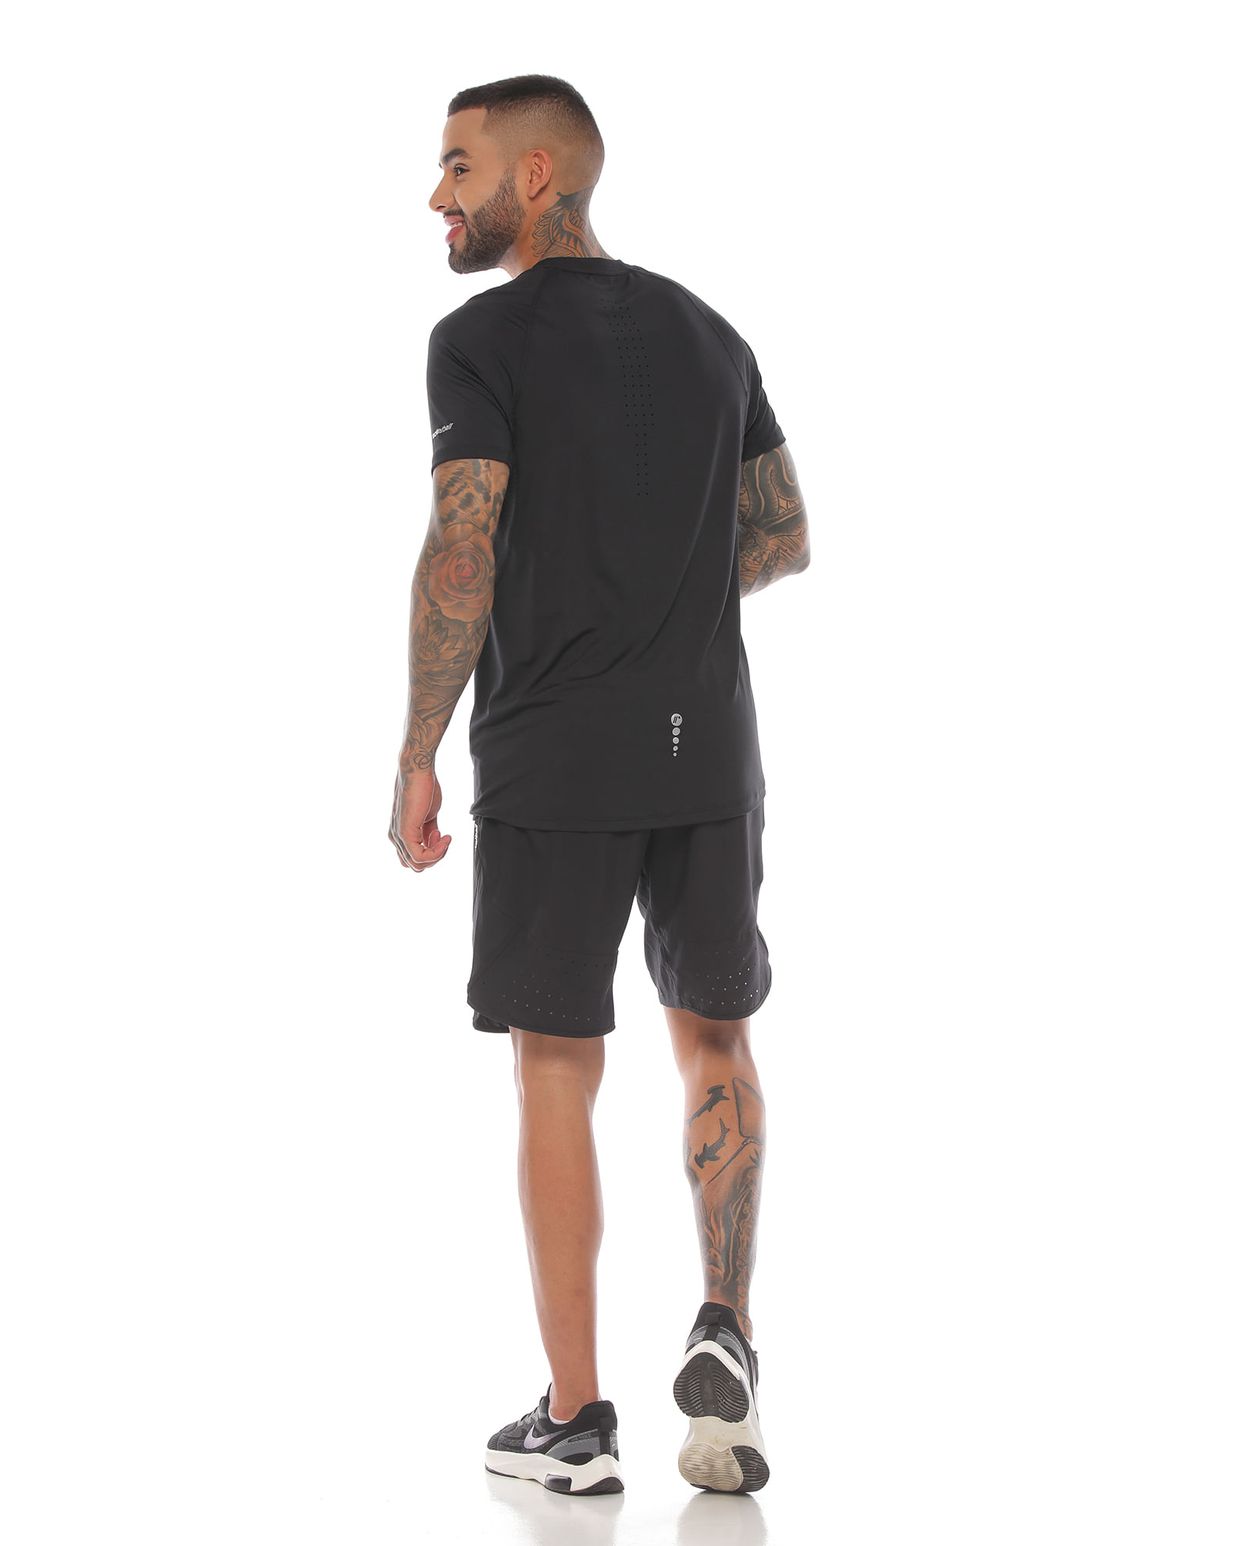 modelo con pantaloneta y camiseta manga corta deportiva color negro para hombre cuerpo completo parte trasera